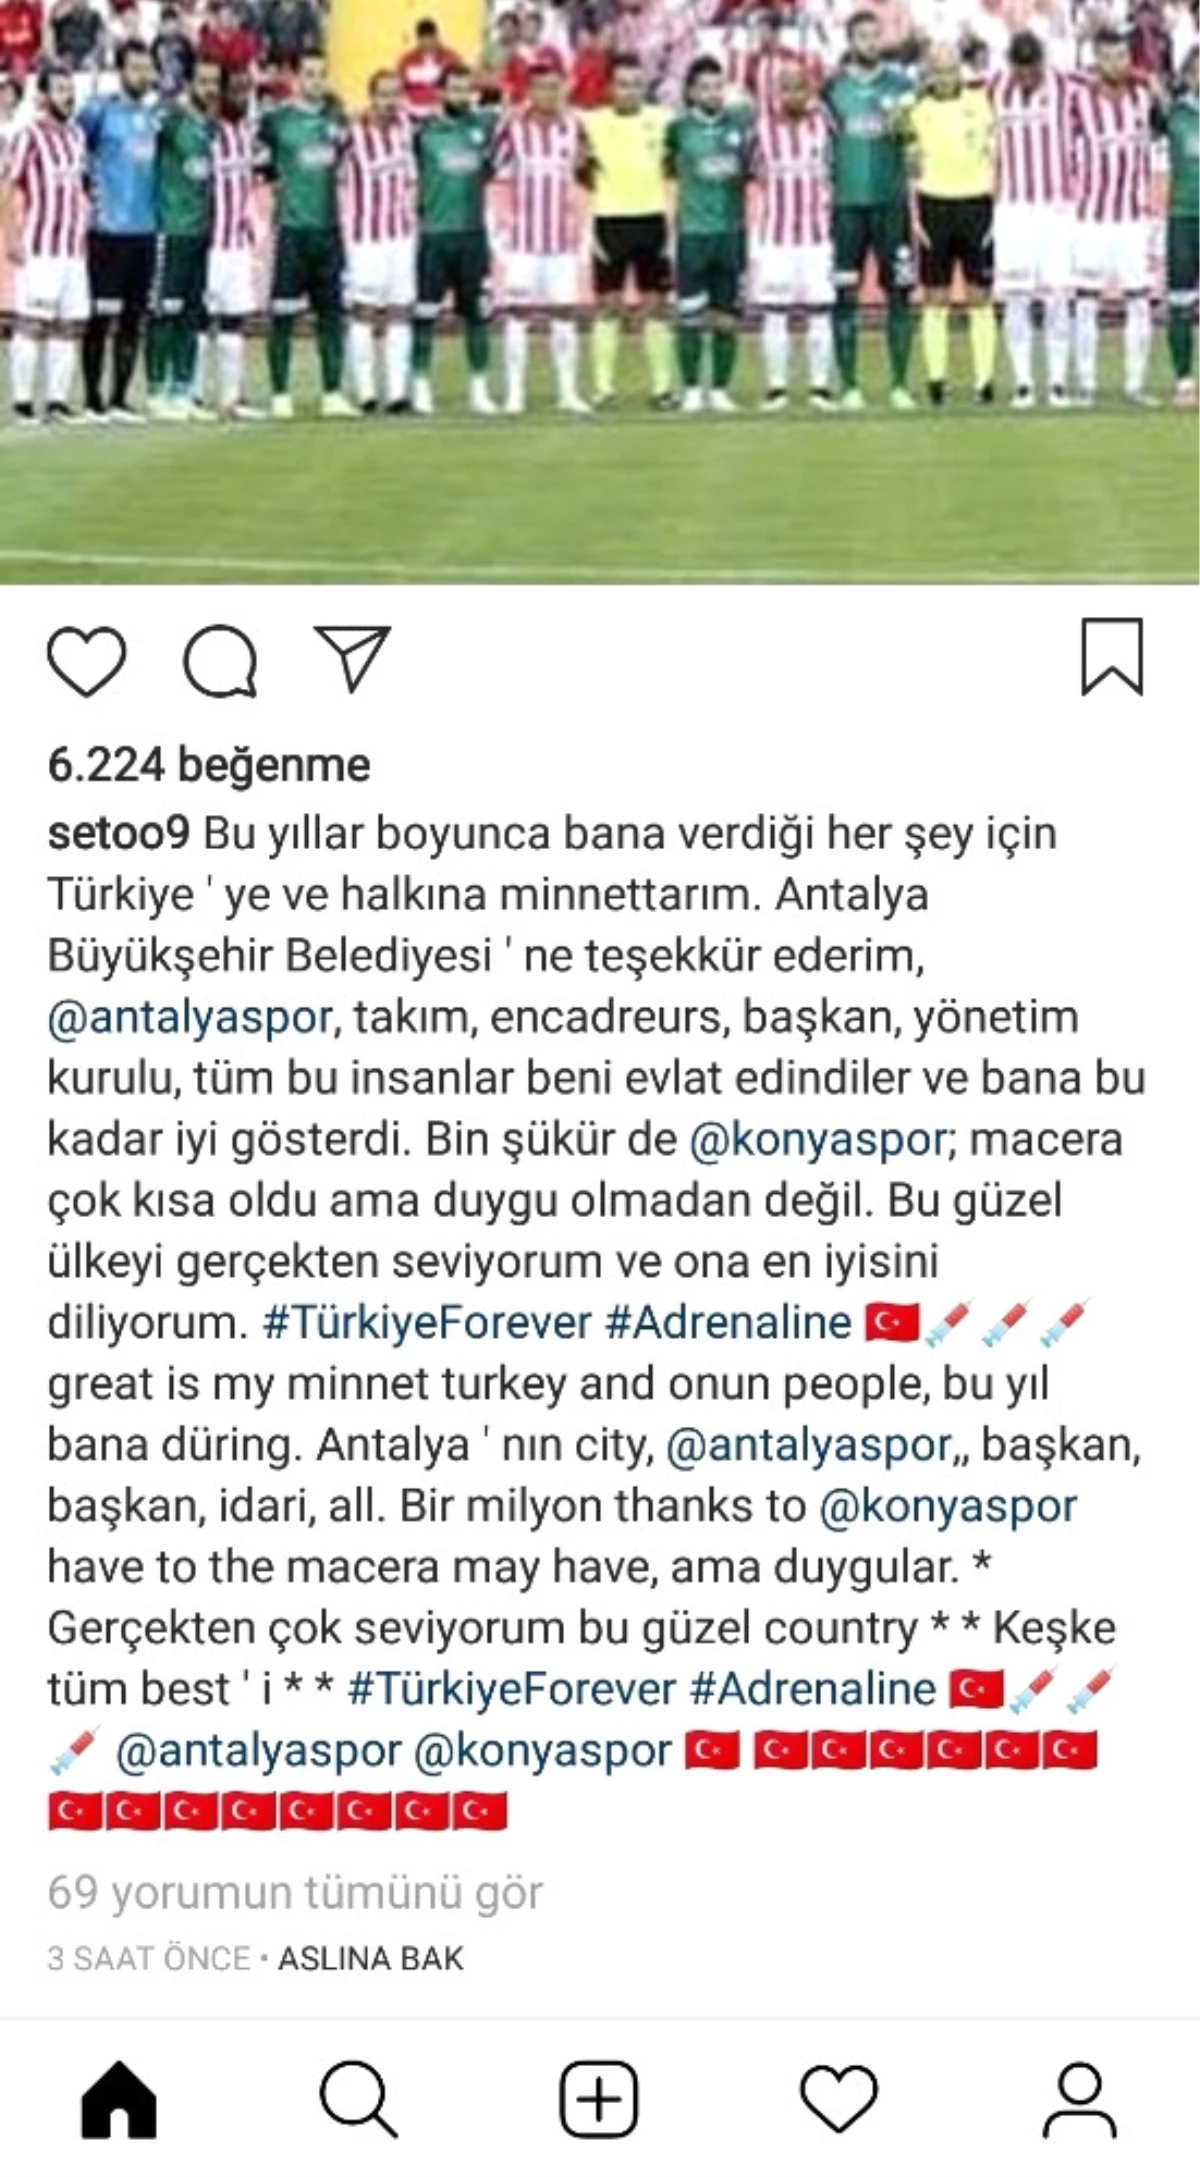 Katar\'a Transfer Olan Eto\'o\'dan Antalyaspor ve Atiker Konyaspor\'a Teşekkür Mesajı